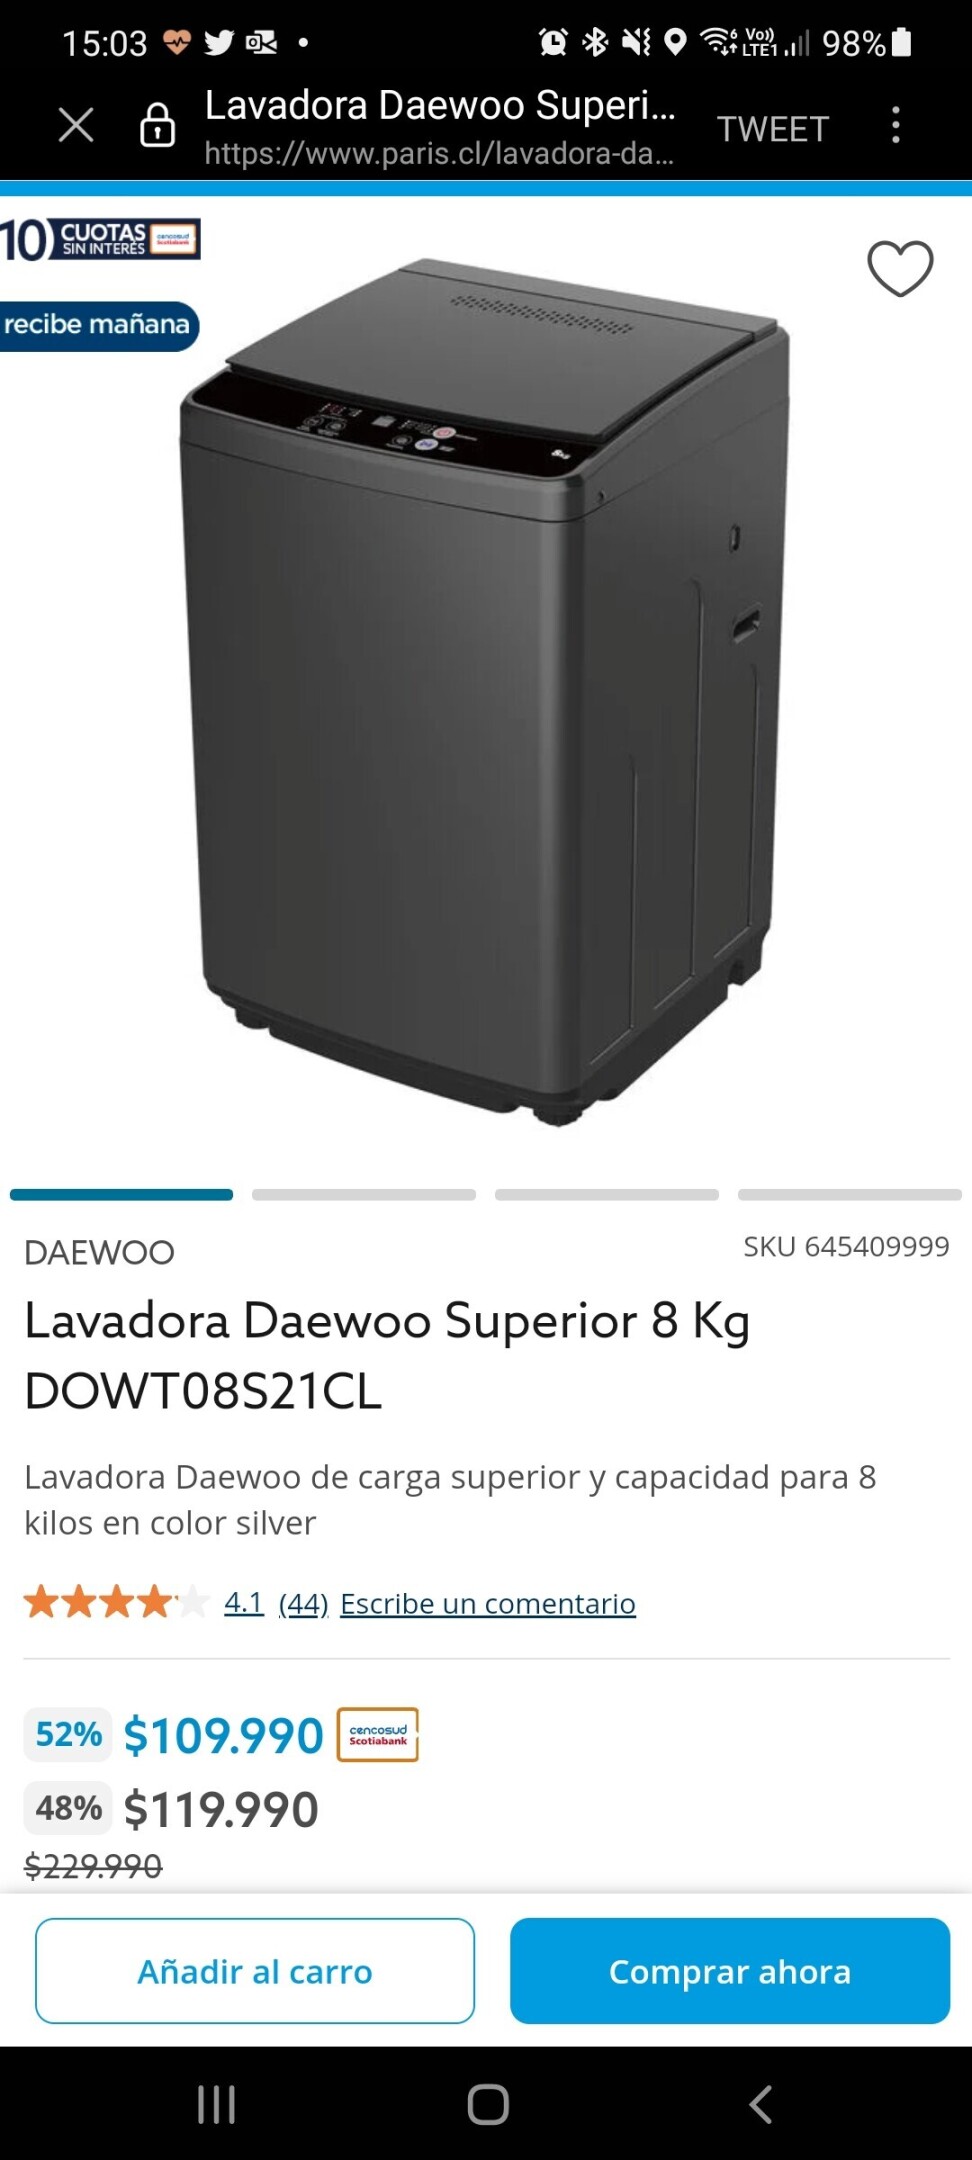 Lavadora Daewoo carga superior 8KG $109.990